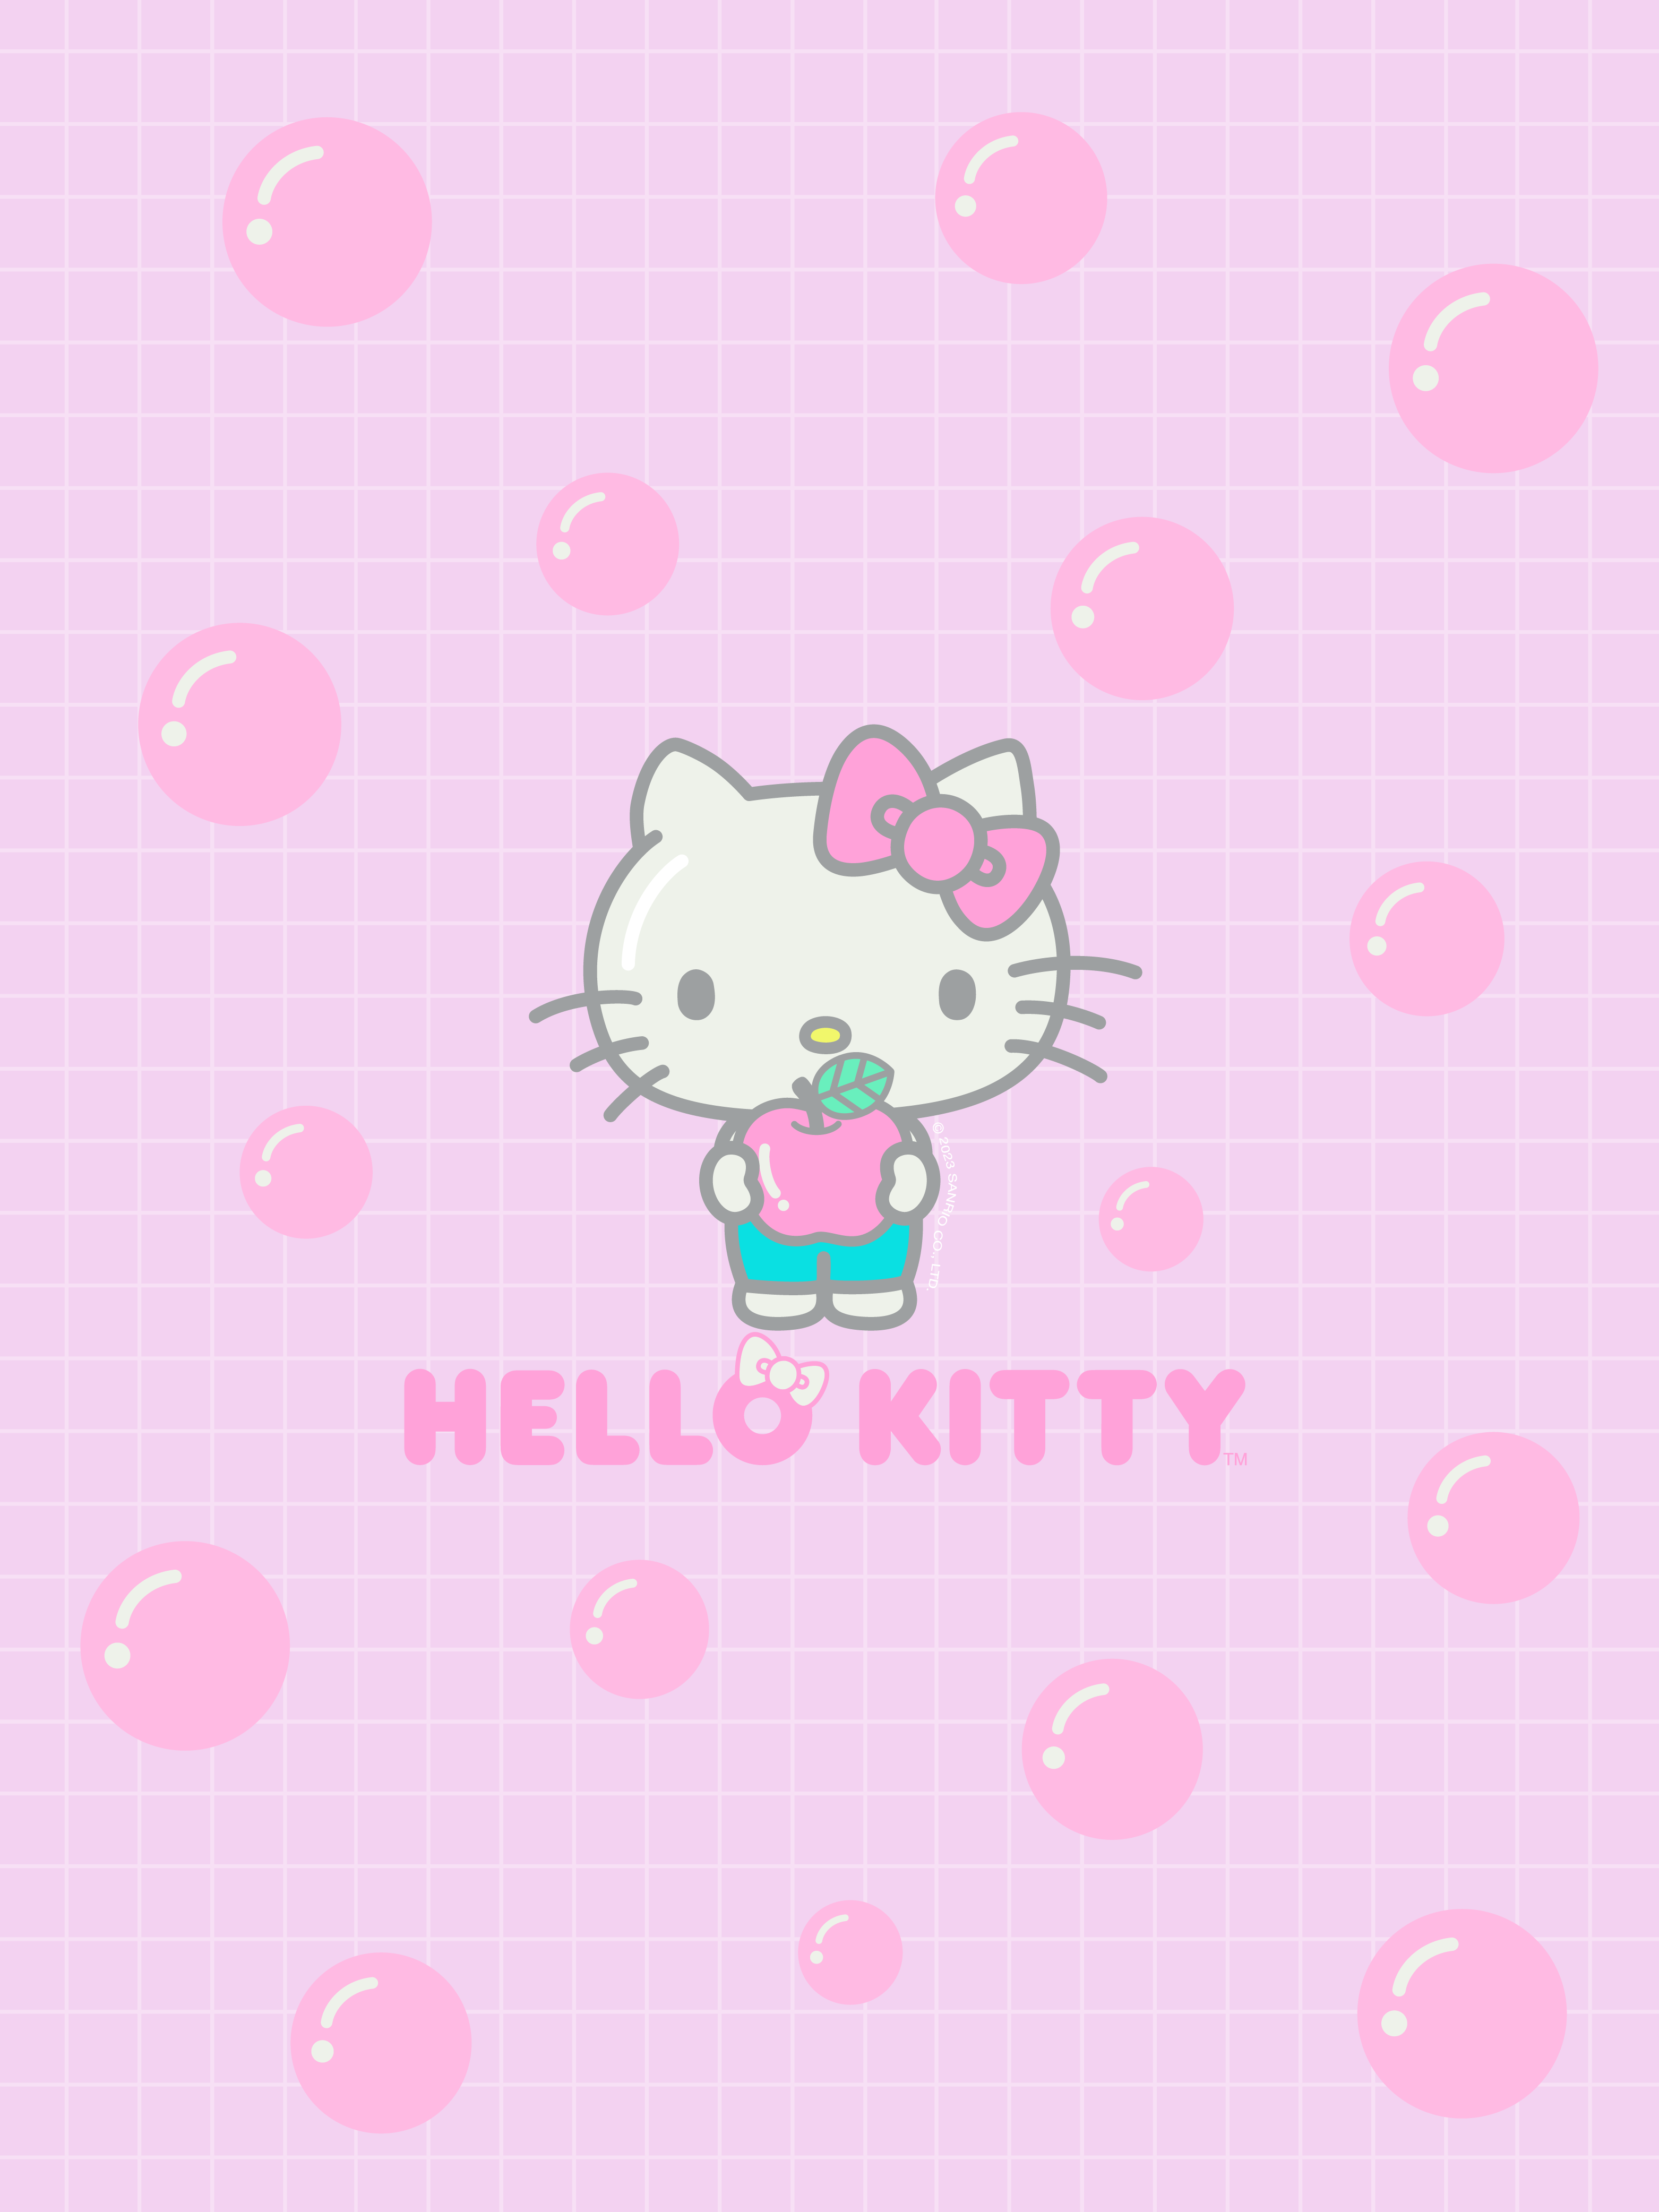 sanrio/hello kitty 3d wallpaper in 2023  Pink wallpaper hello kitty, Pink hello  kitty wallpaper iphone, Hello kitty wallpaper hd